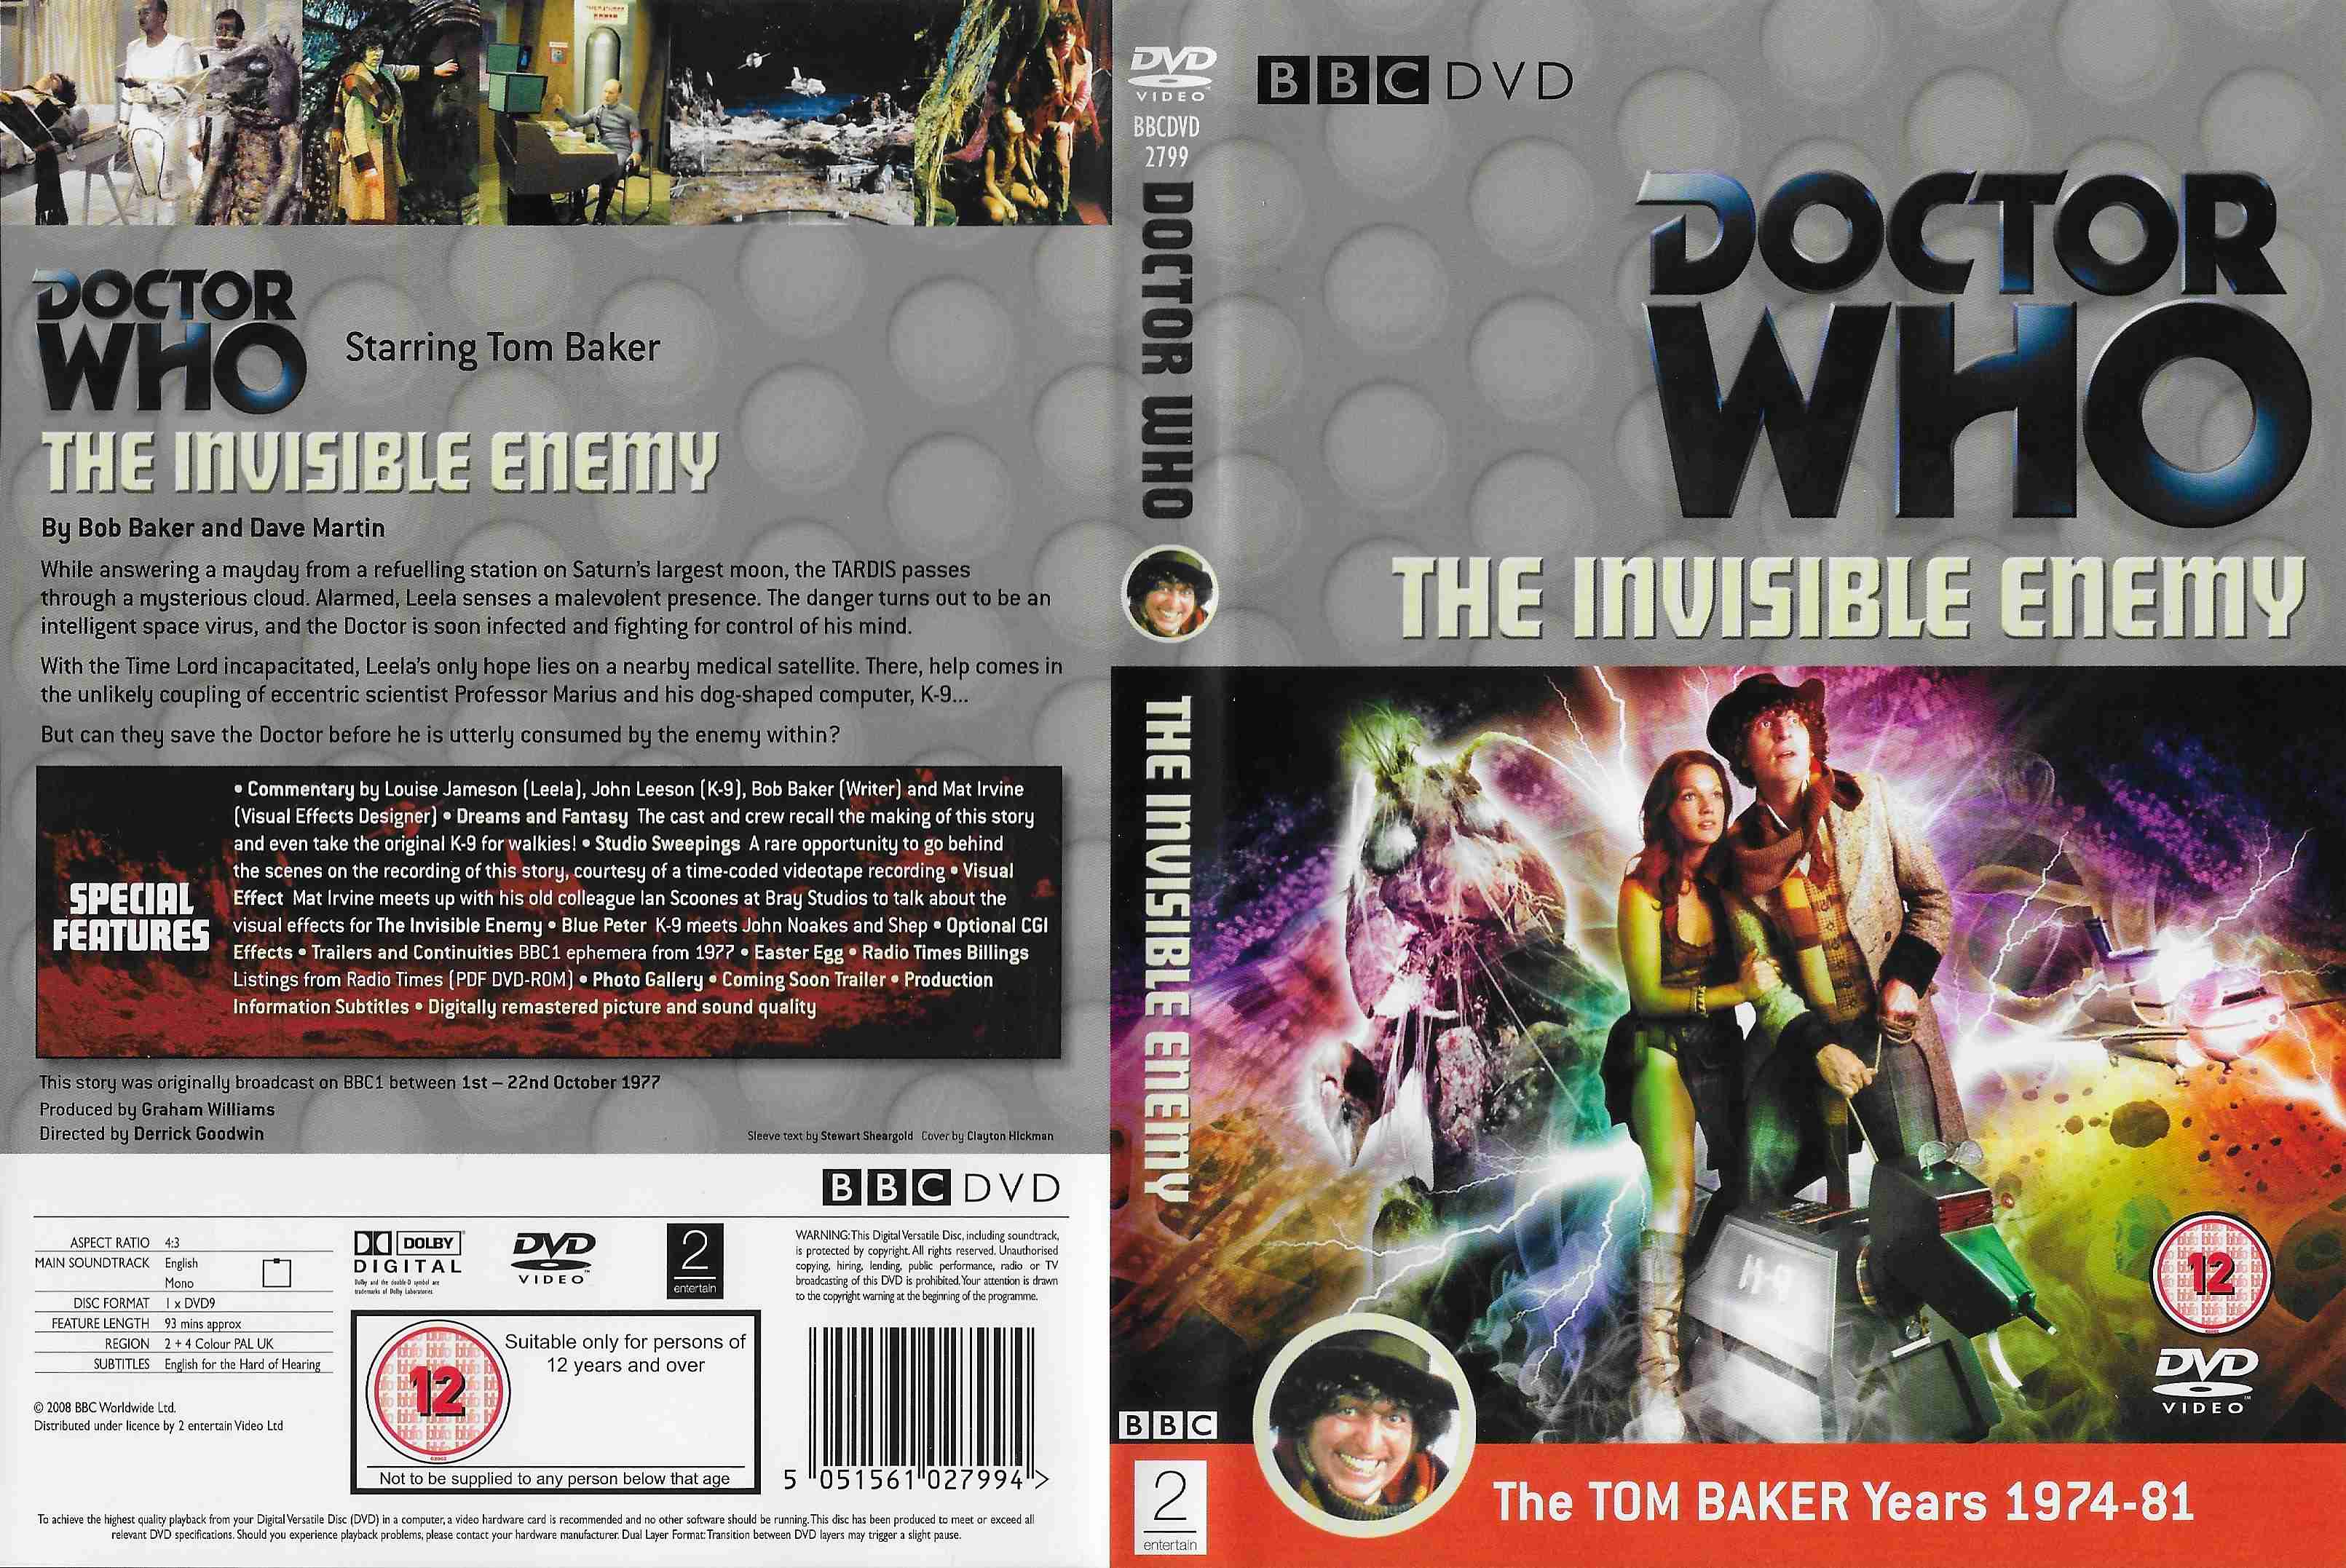 Back cover of BBCDVD 2799